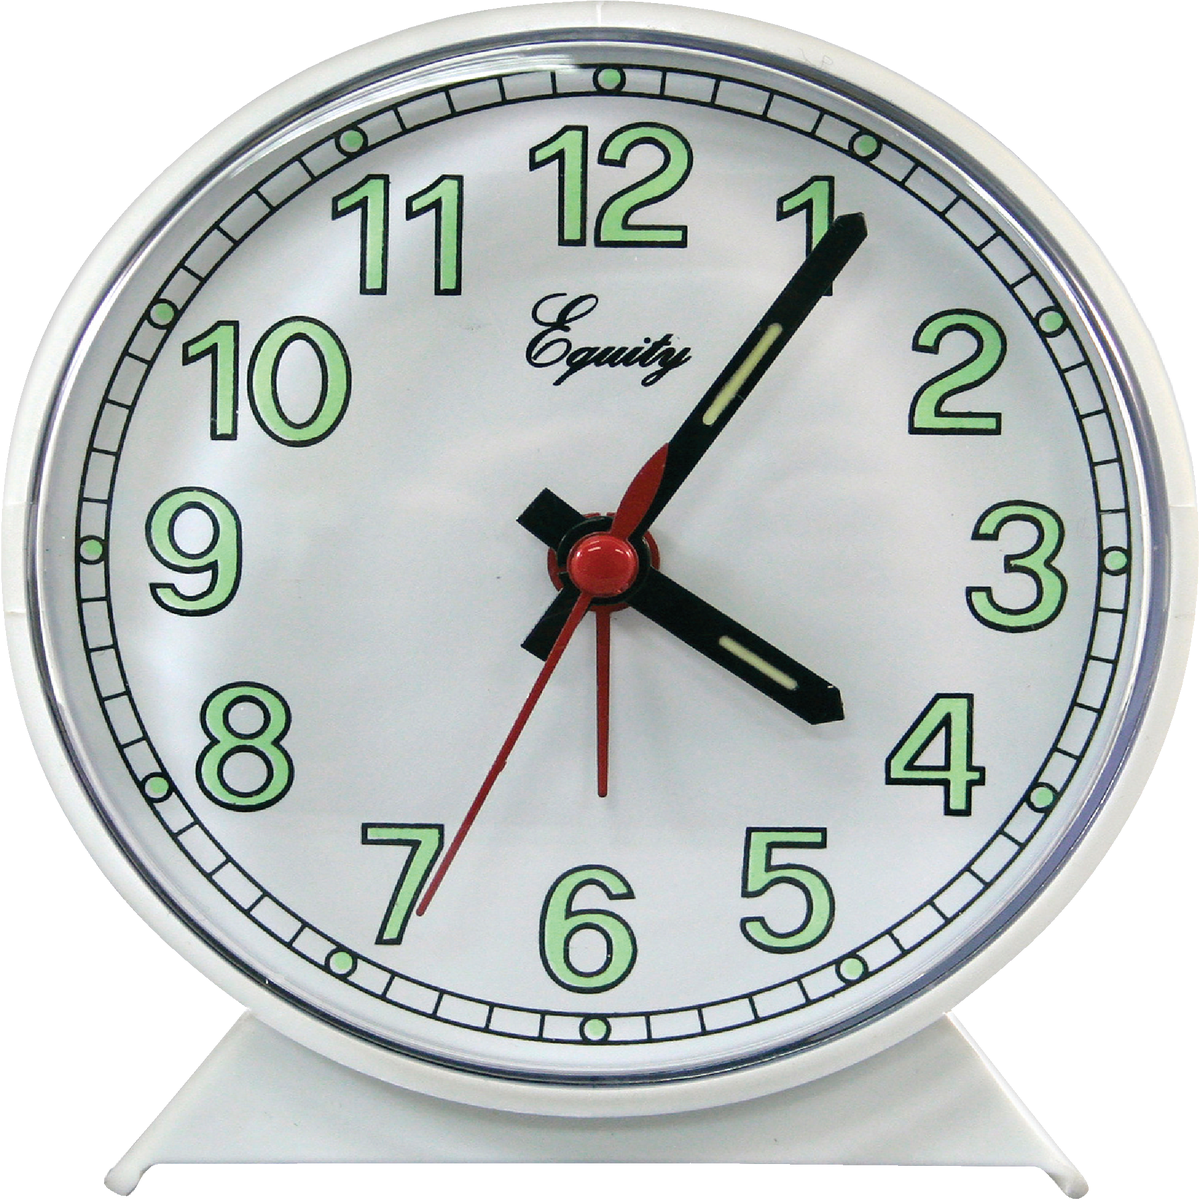 Keywound Alarm Clock